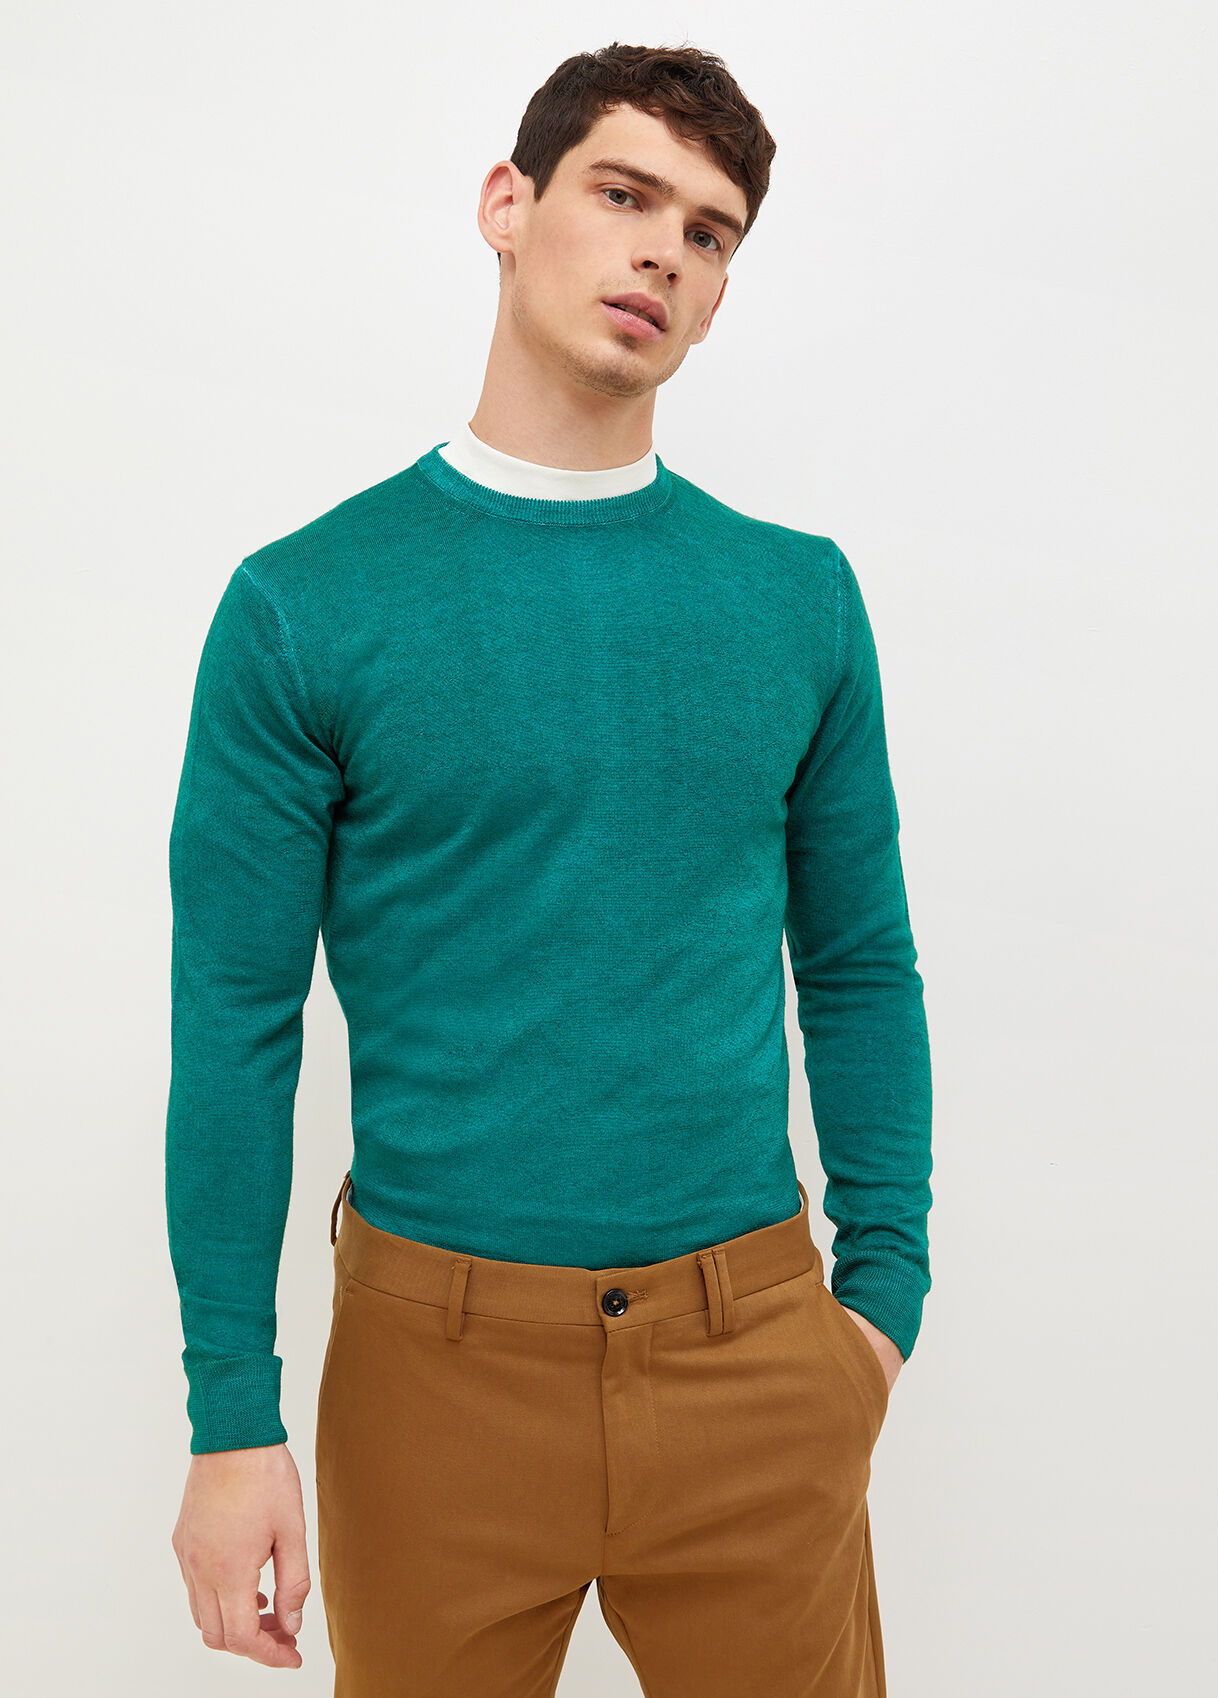 Men's sweatshirts and designer hoodies | shop online at LIU JO